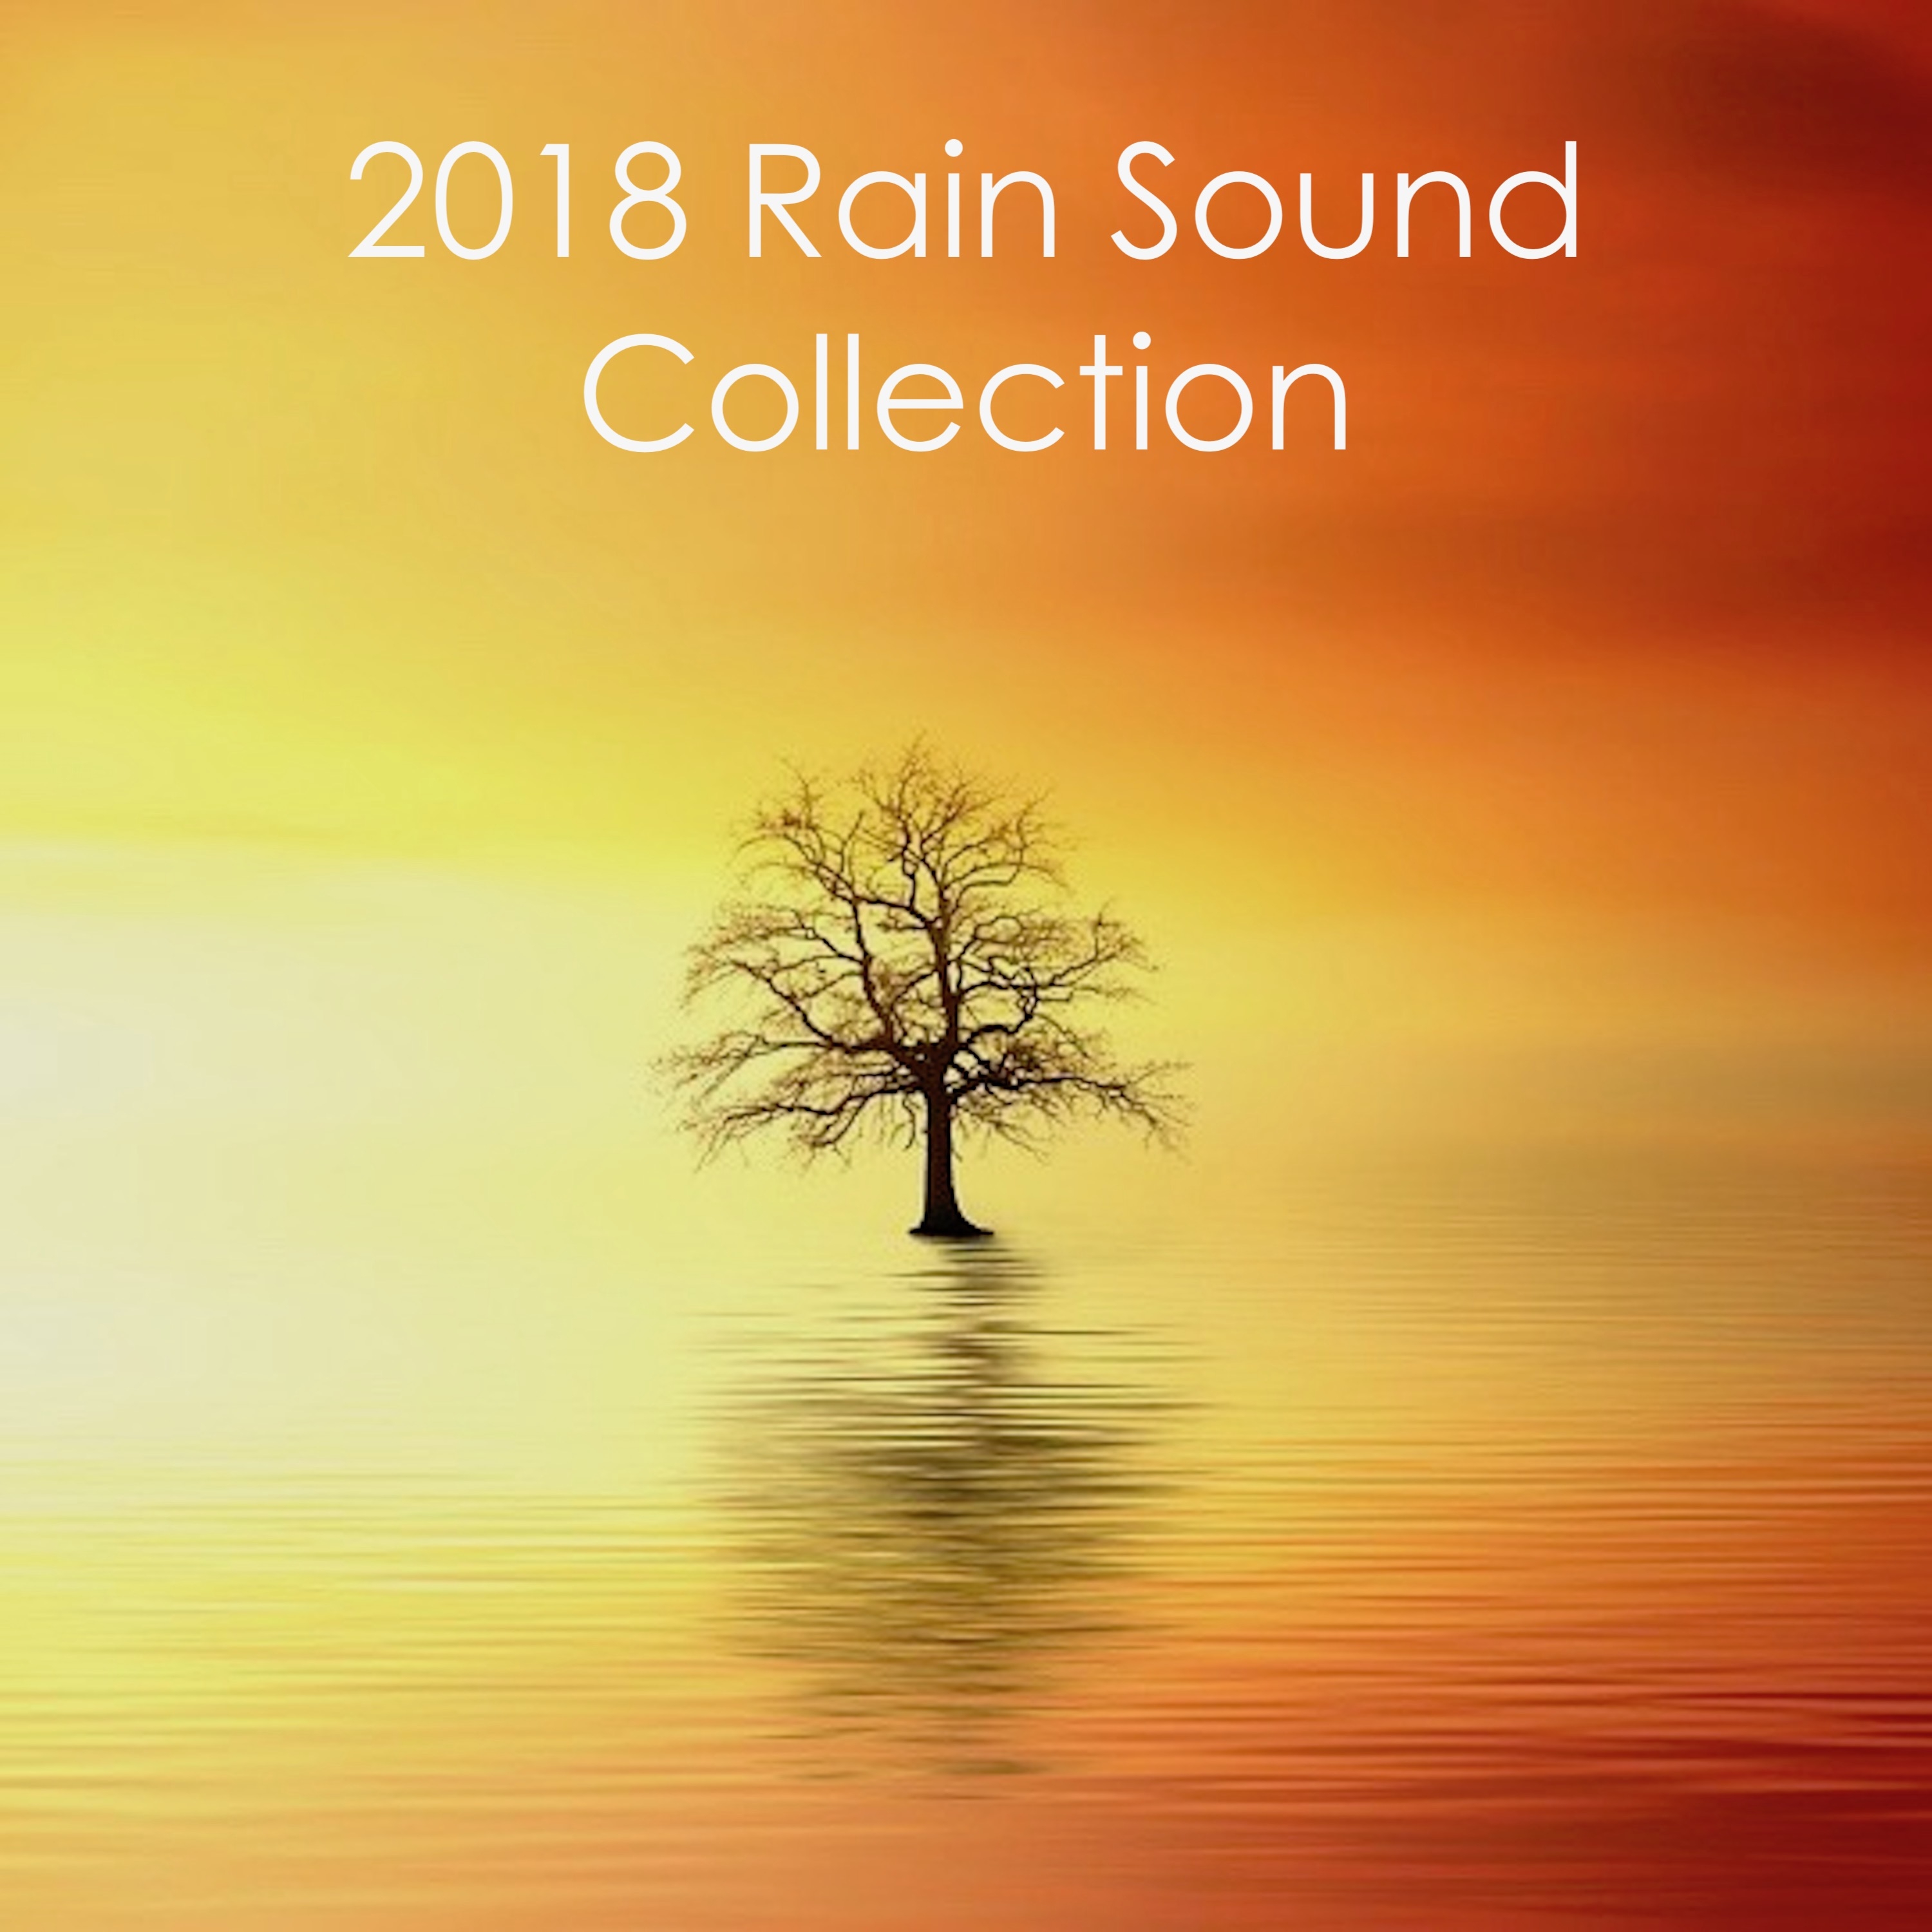 #2018 Rain Sound Collection. Natural Rain Sounds for a Good Night's Sleep